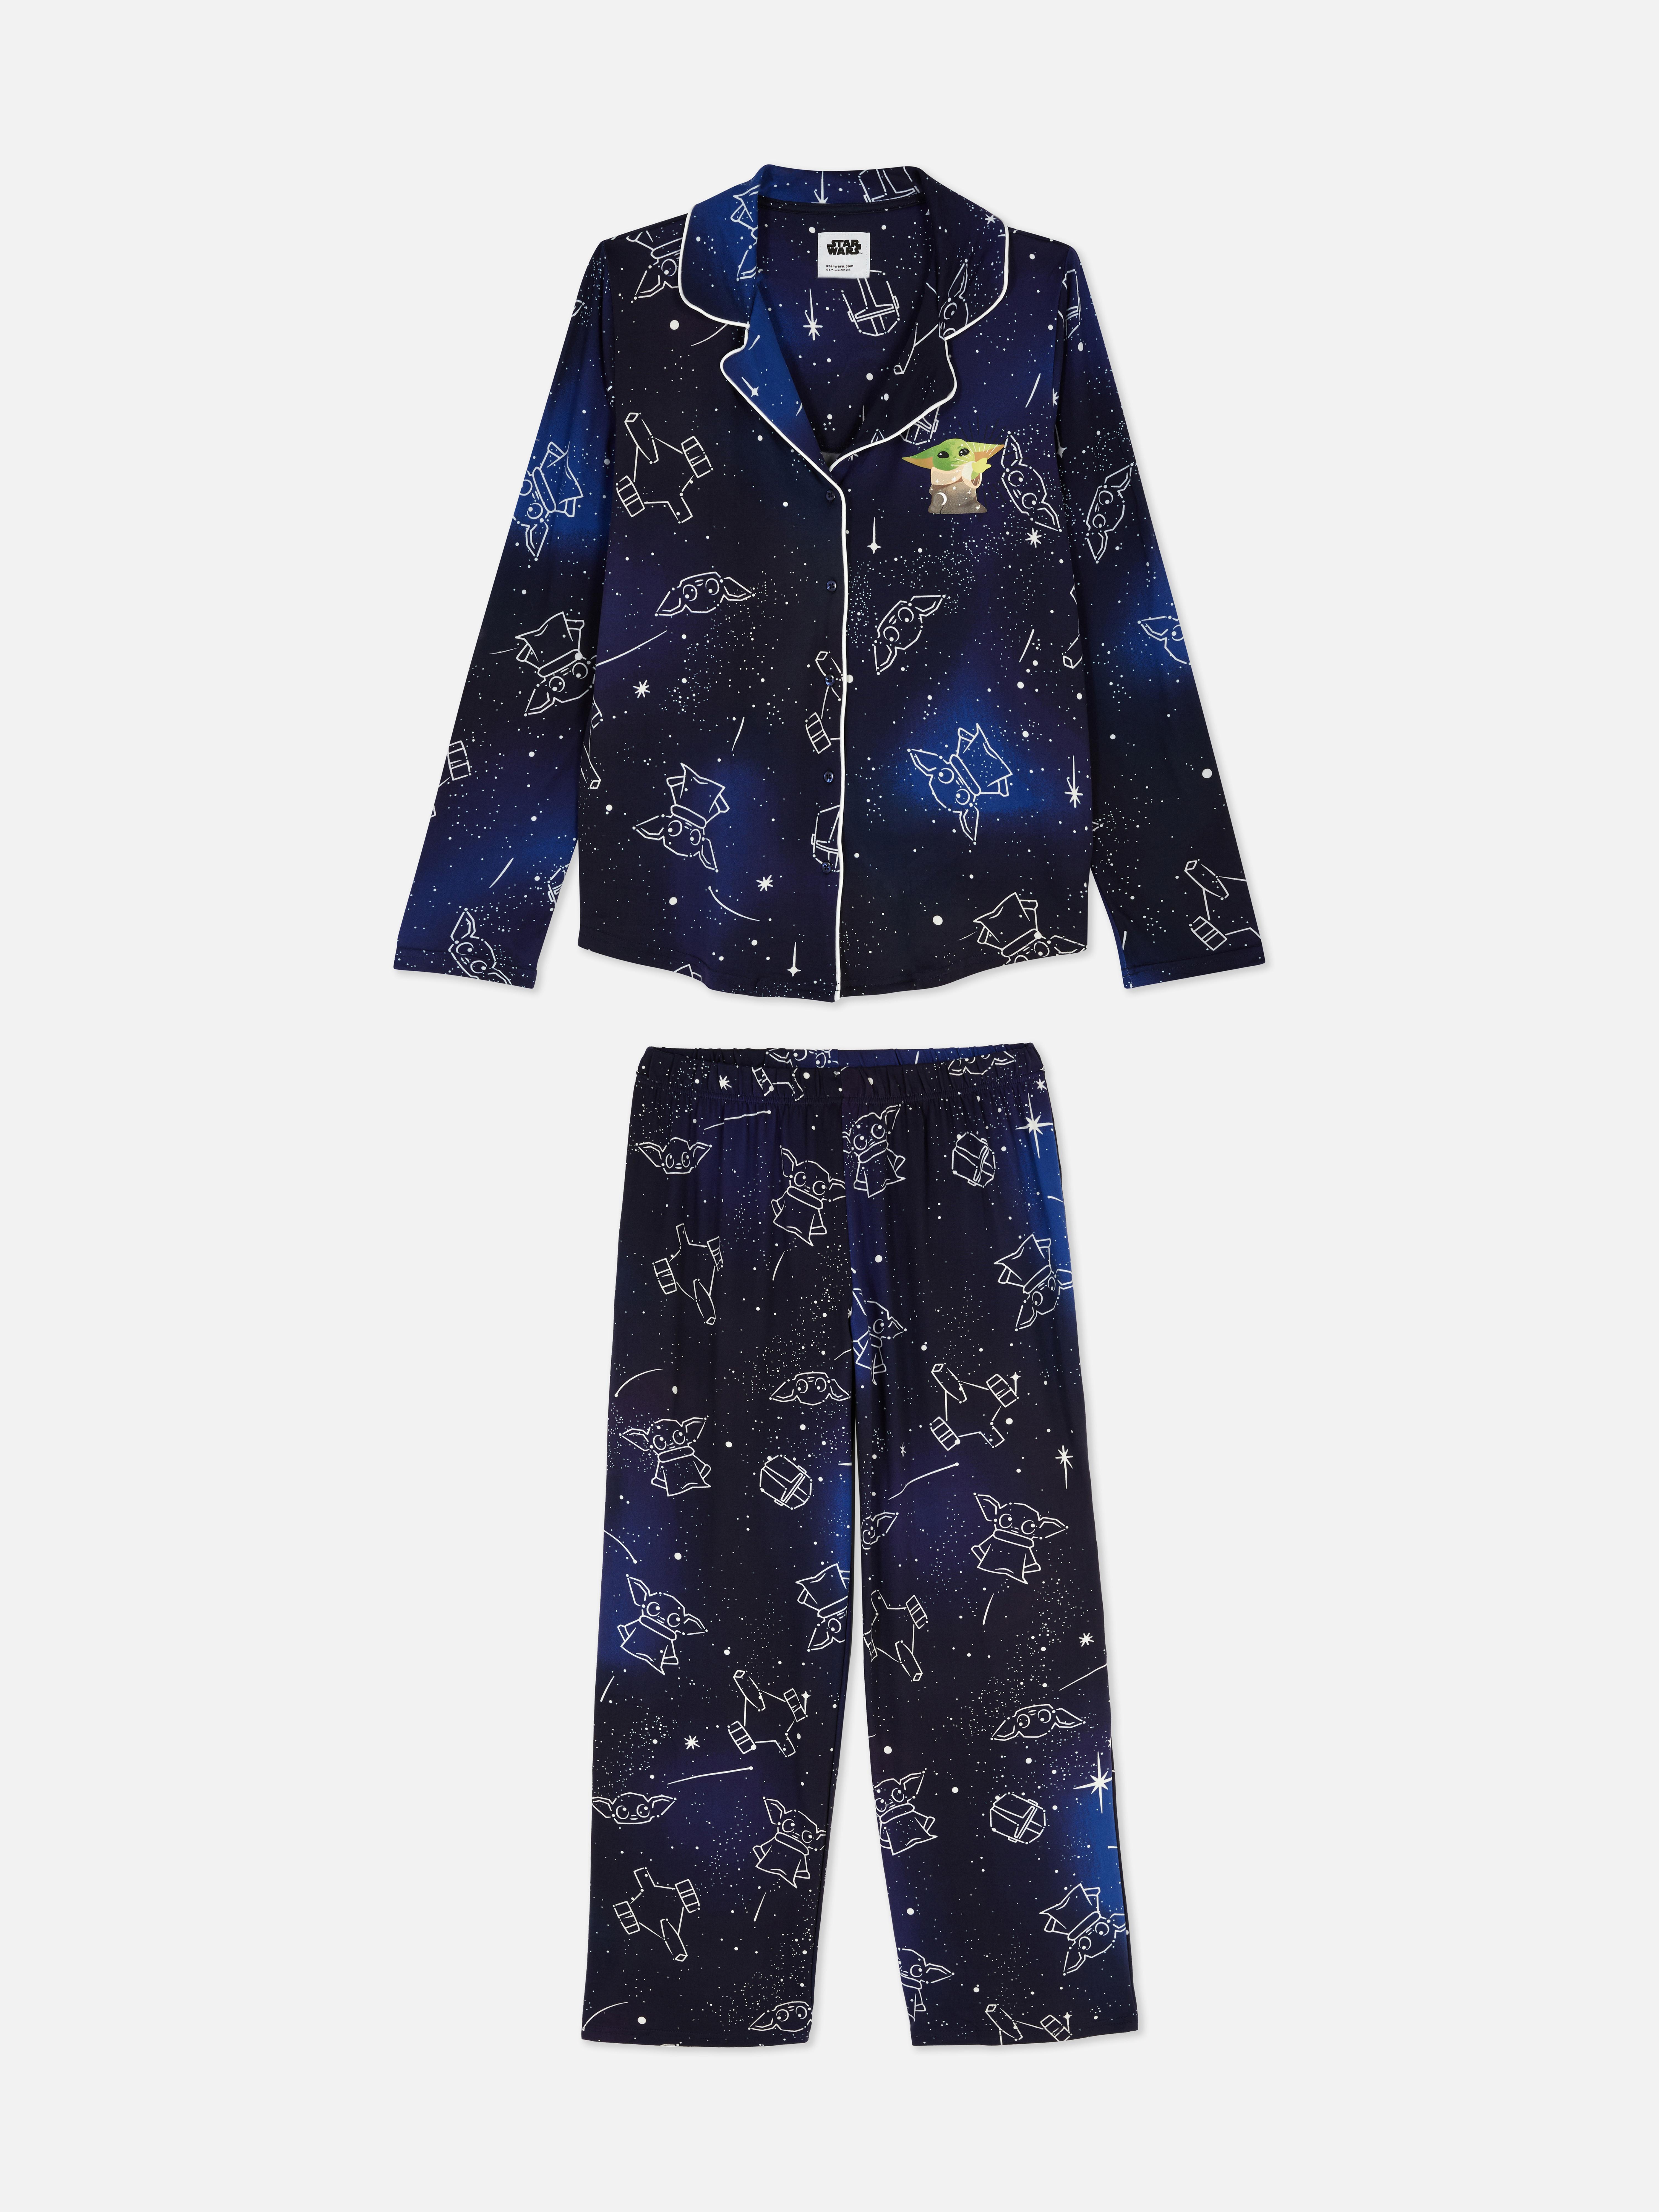 PRIMARK Pyjamas, Sleepwear & Lounge wear September 2020